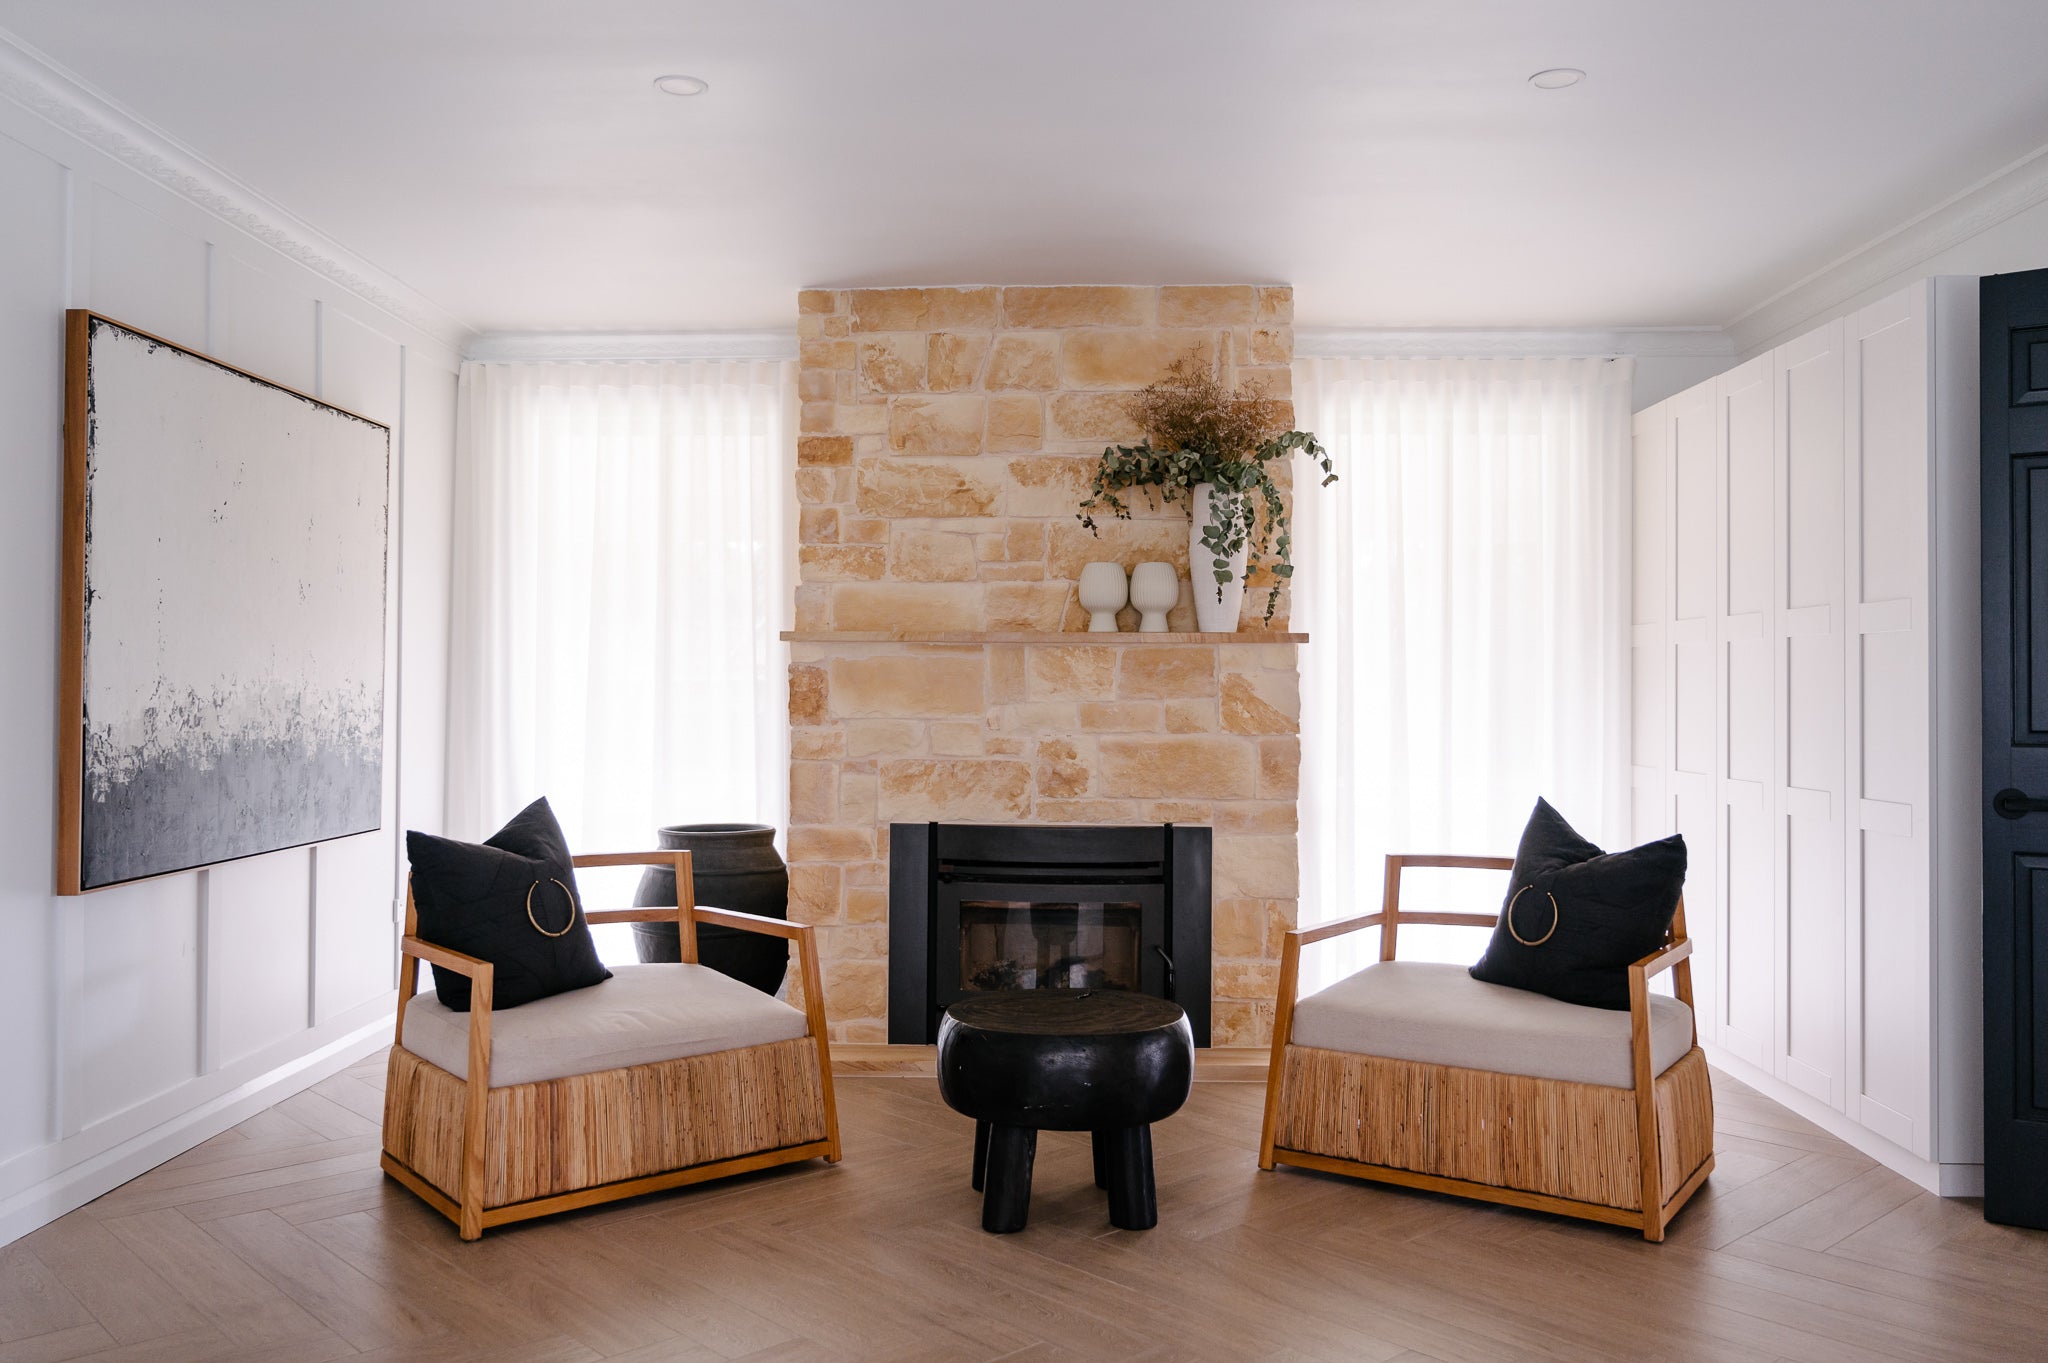 terrace-tiles-stone-fireplace-living-room-design-herringbone-floor-modern farmhouse-renovation-stone cladding